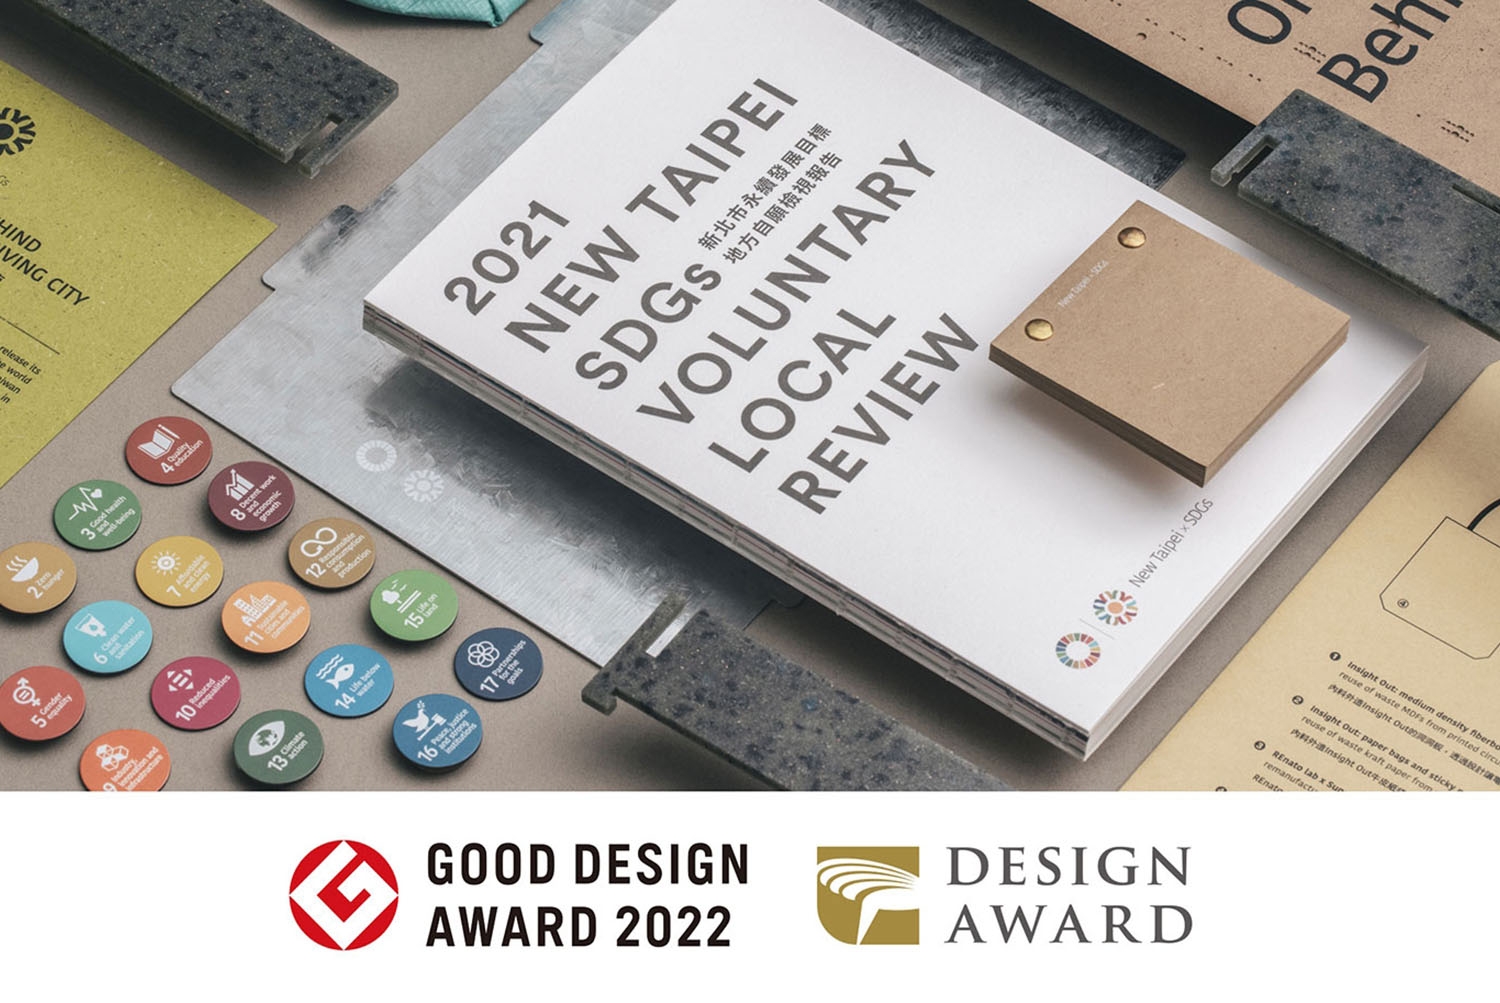 2021 New Taipei SDGs Voluntary Local Review was awarded Good Design Award and Golden Pin Design Award